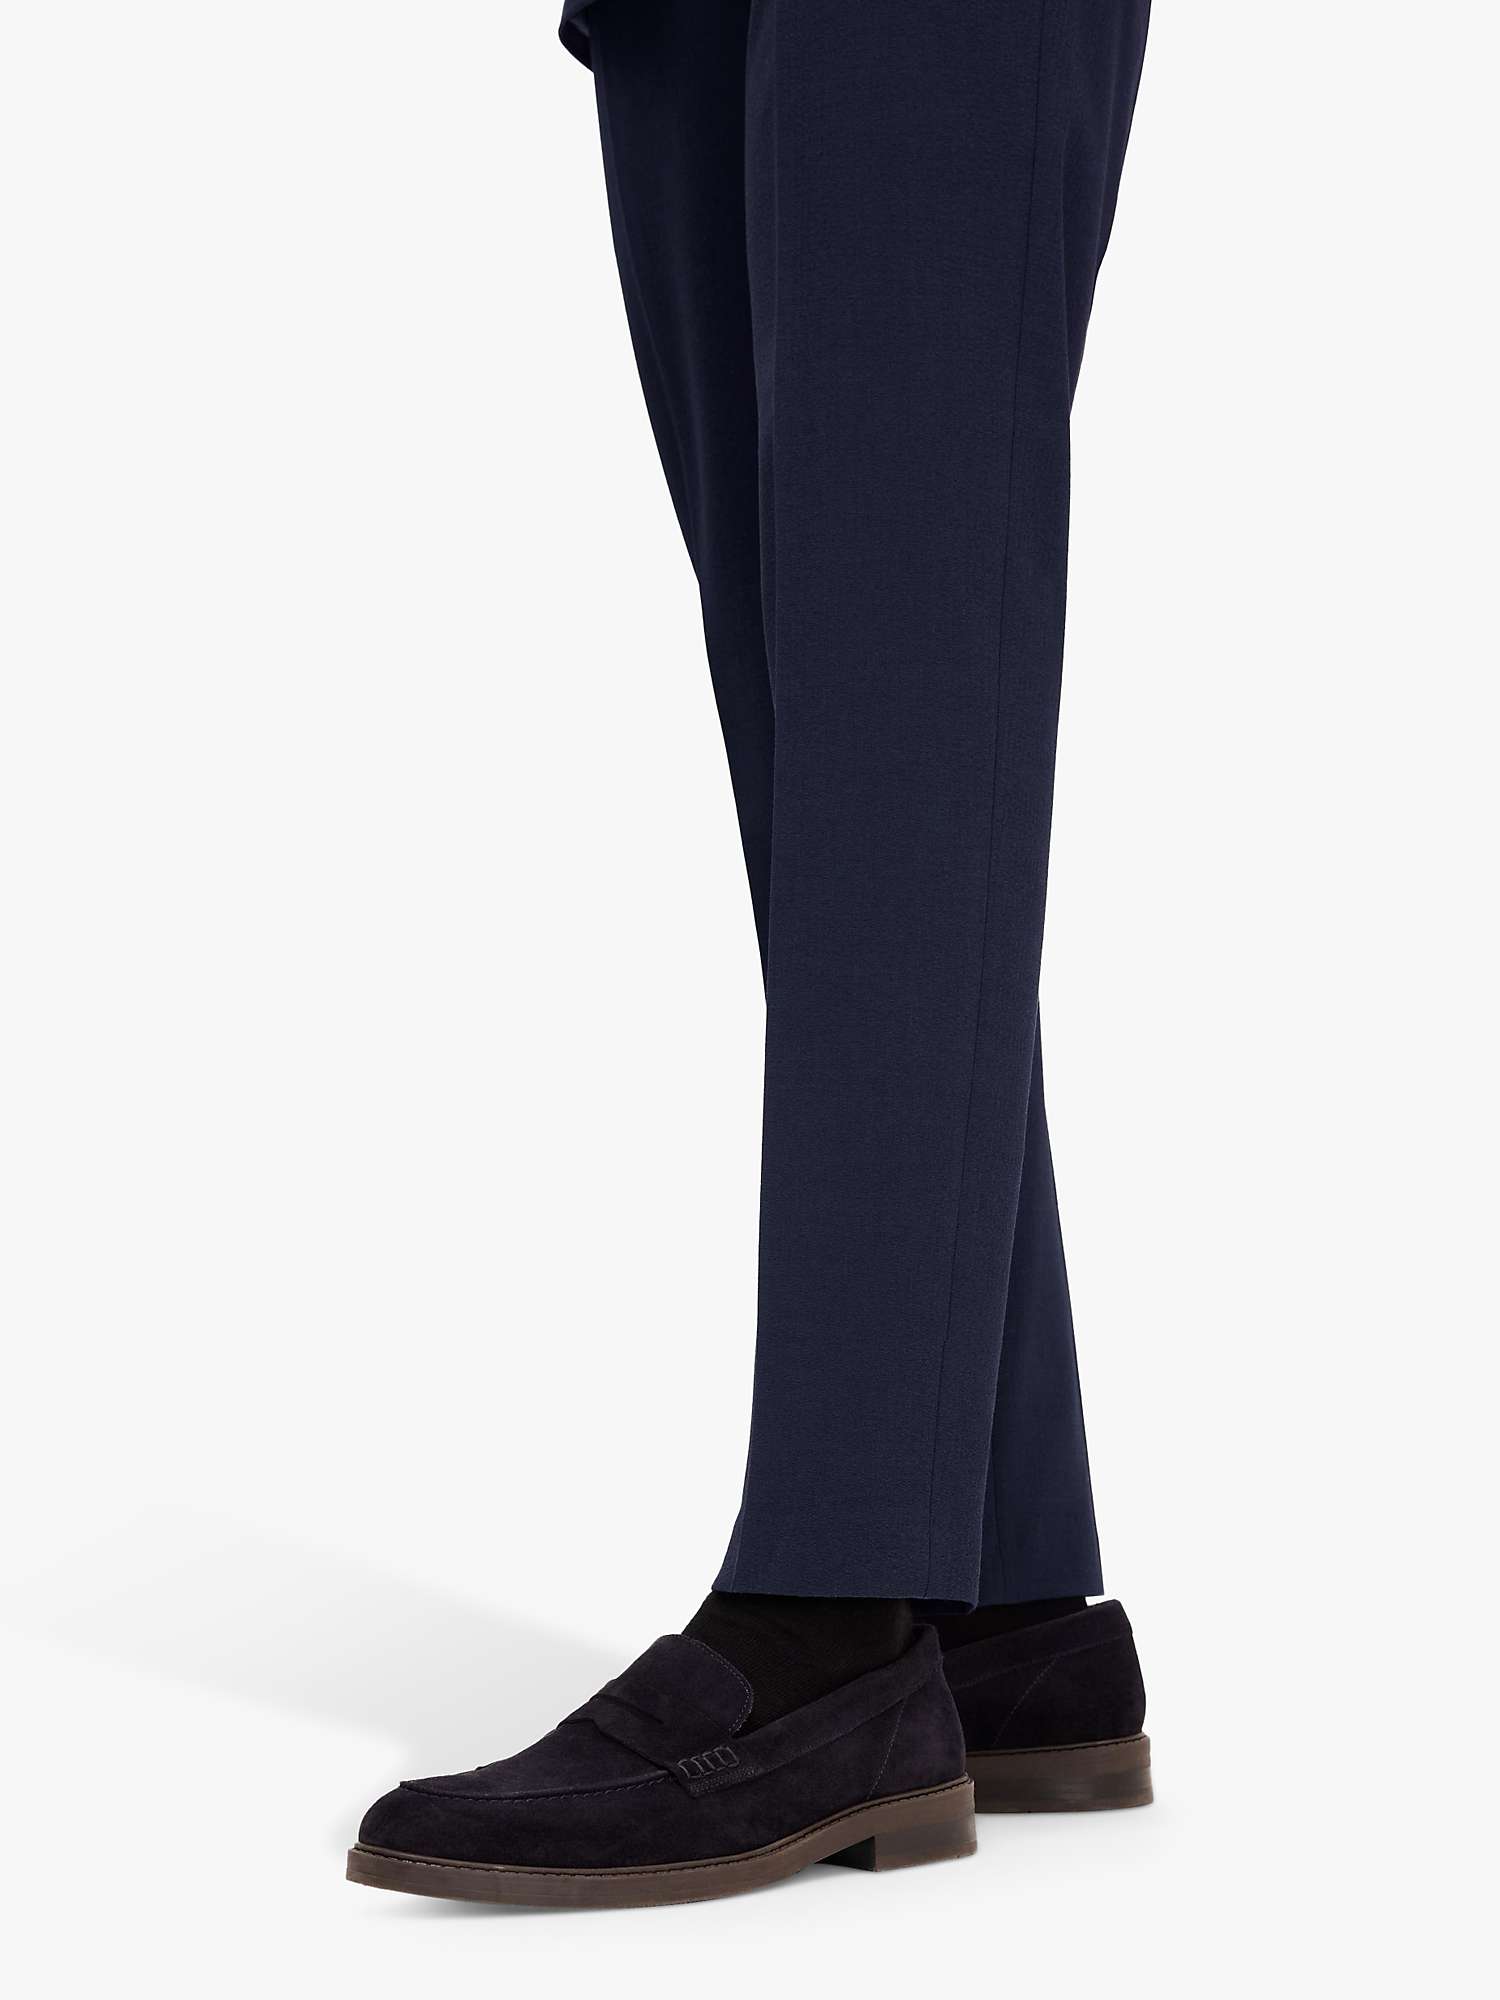 Buy SELECTED HOMME Seersucker Trousers, Navy Online at johnlewis.com